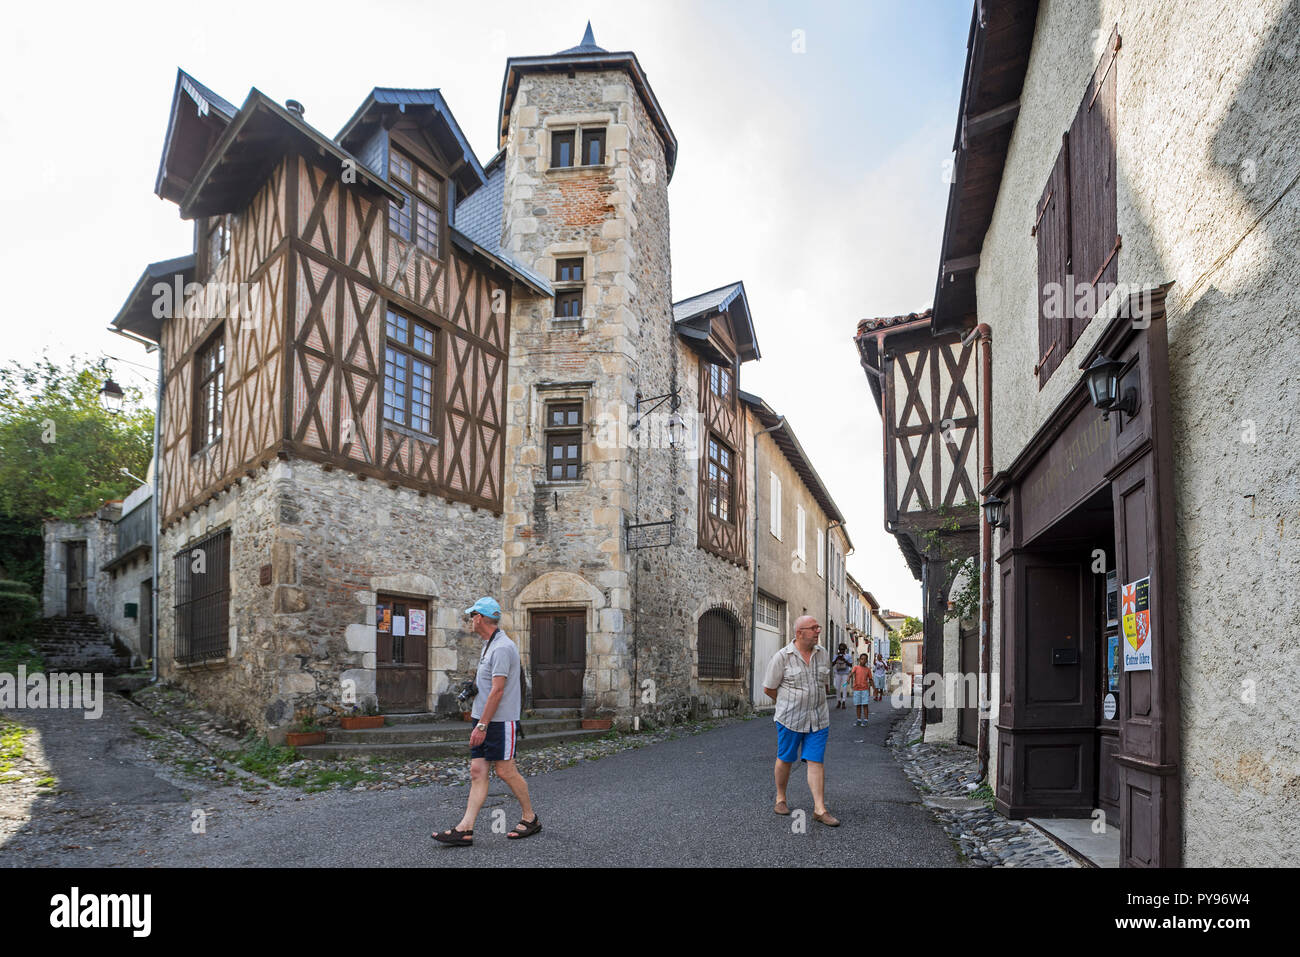 Maison Bridaut del siglo XV en la aldea medieval de Saint-Bertrand-de-Comminges, Haute-Garonne, Pirineos, Francia Foto de stock